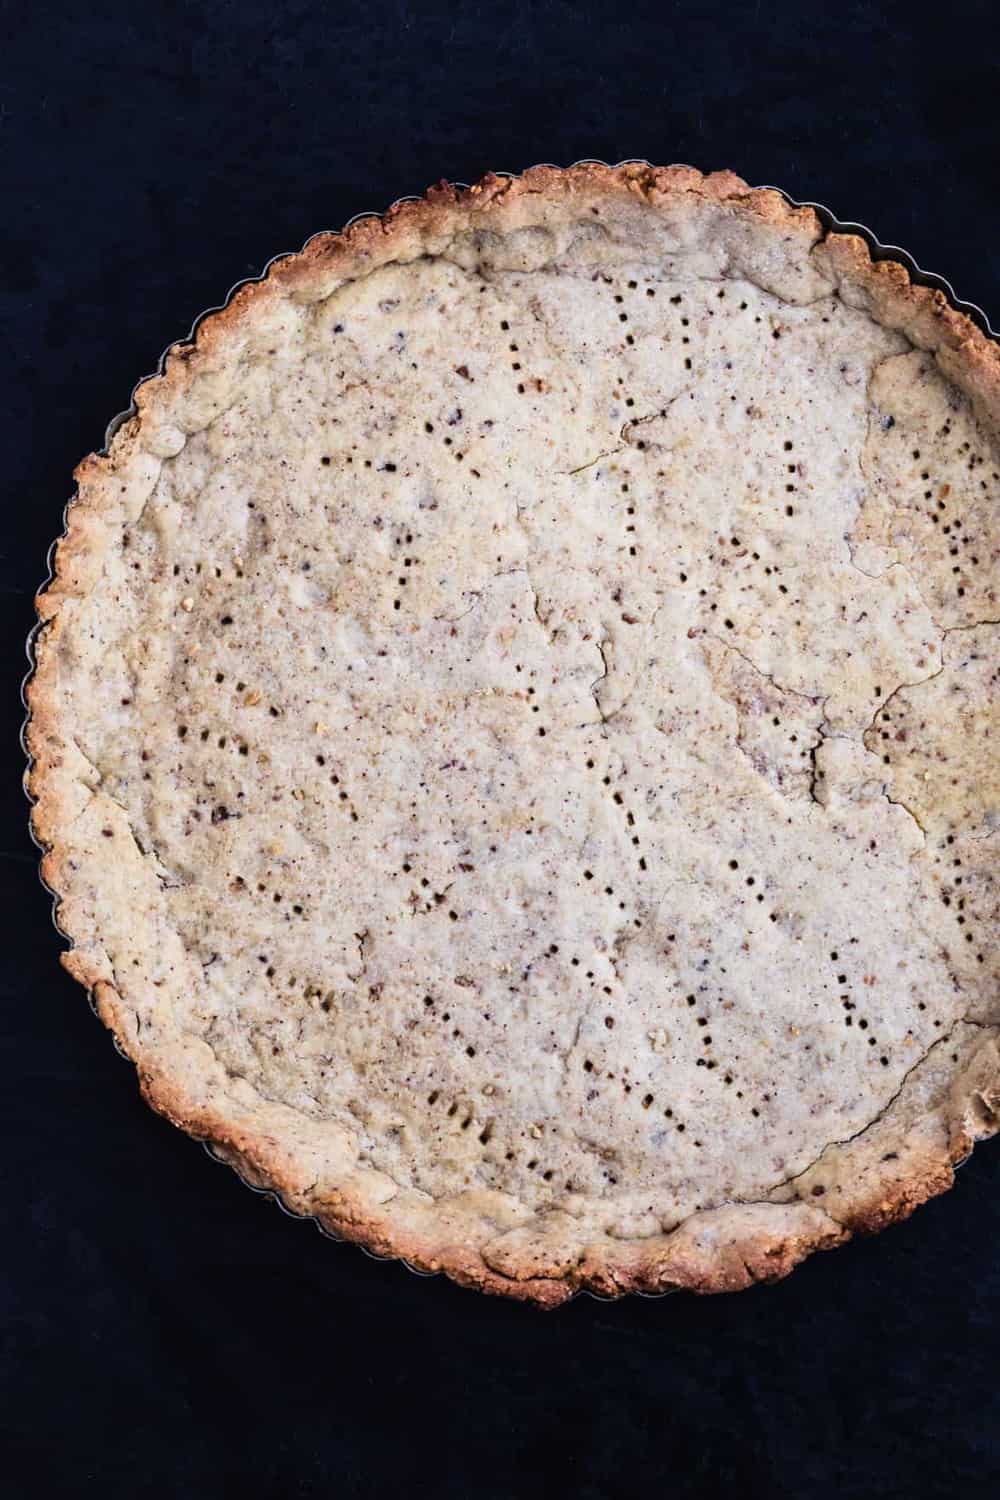 Par baked tart crust, in a tart pan, on a black background.